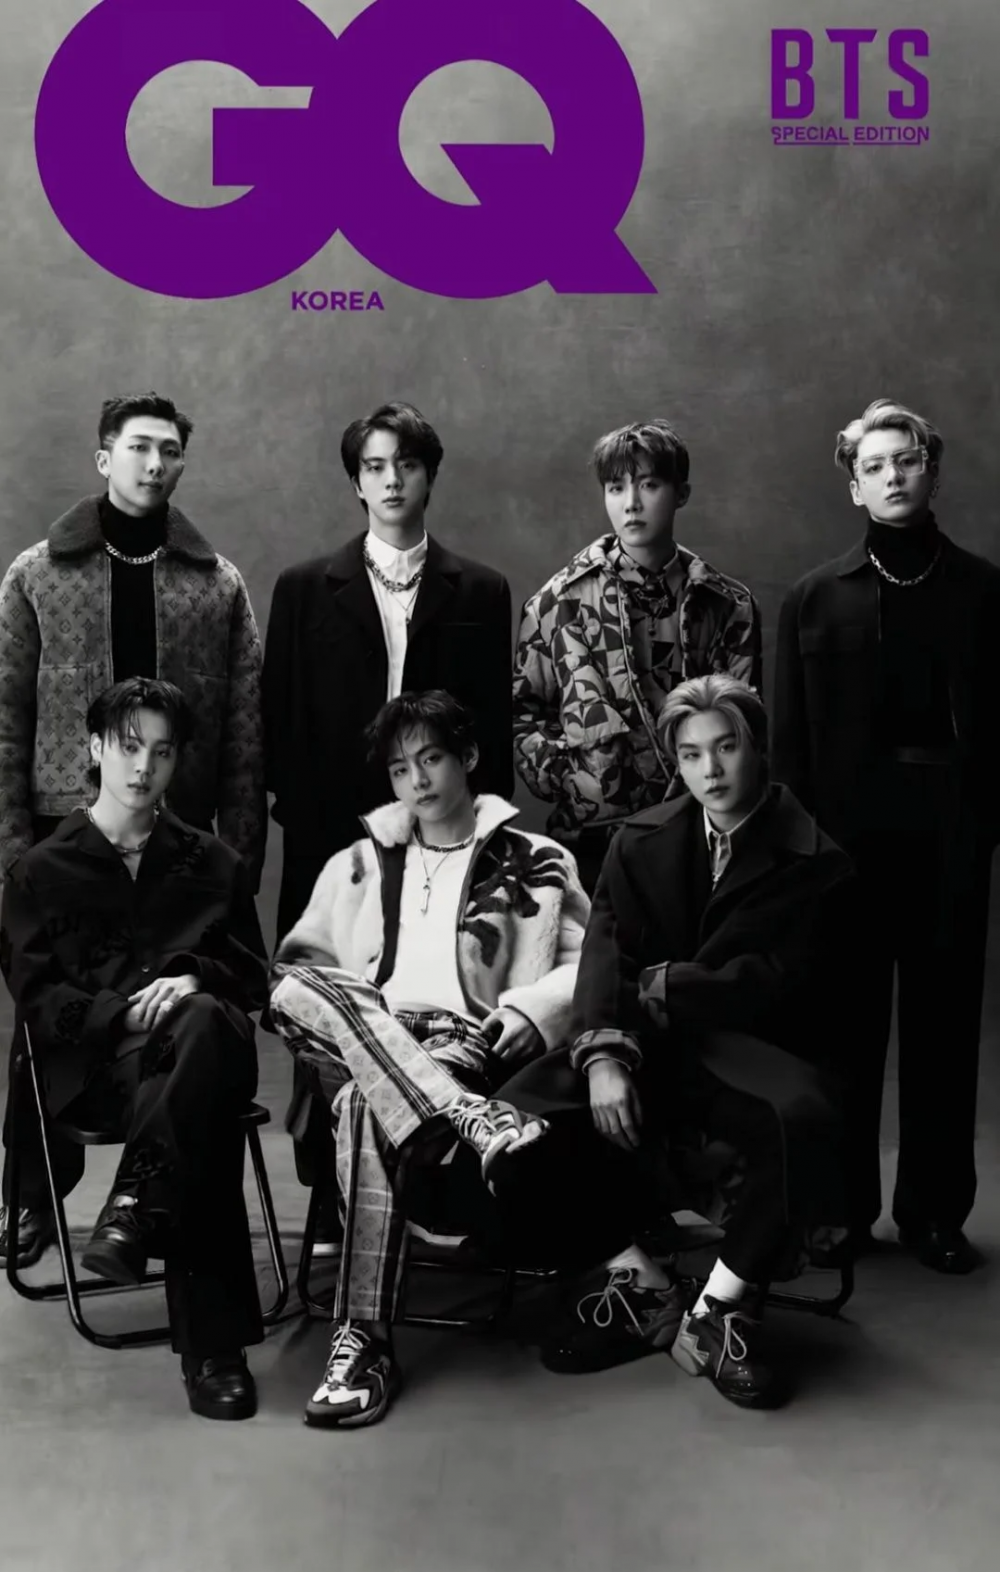 GQ Korea x Vogue Korea release the breathtaking covers of BTS 